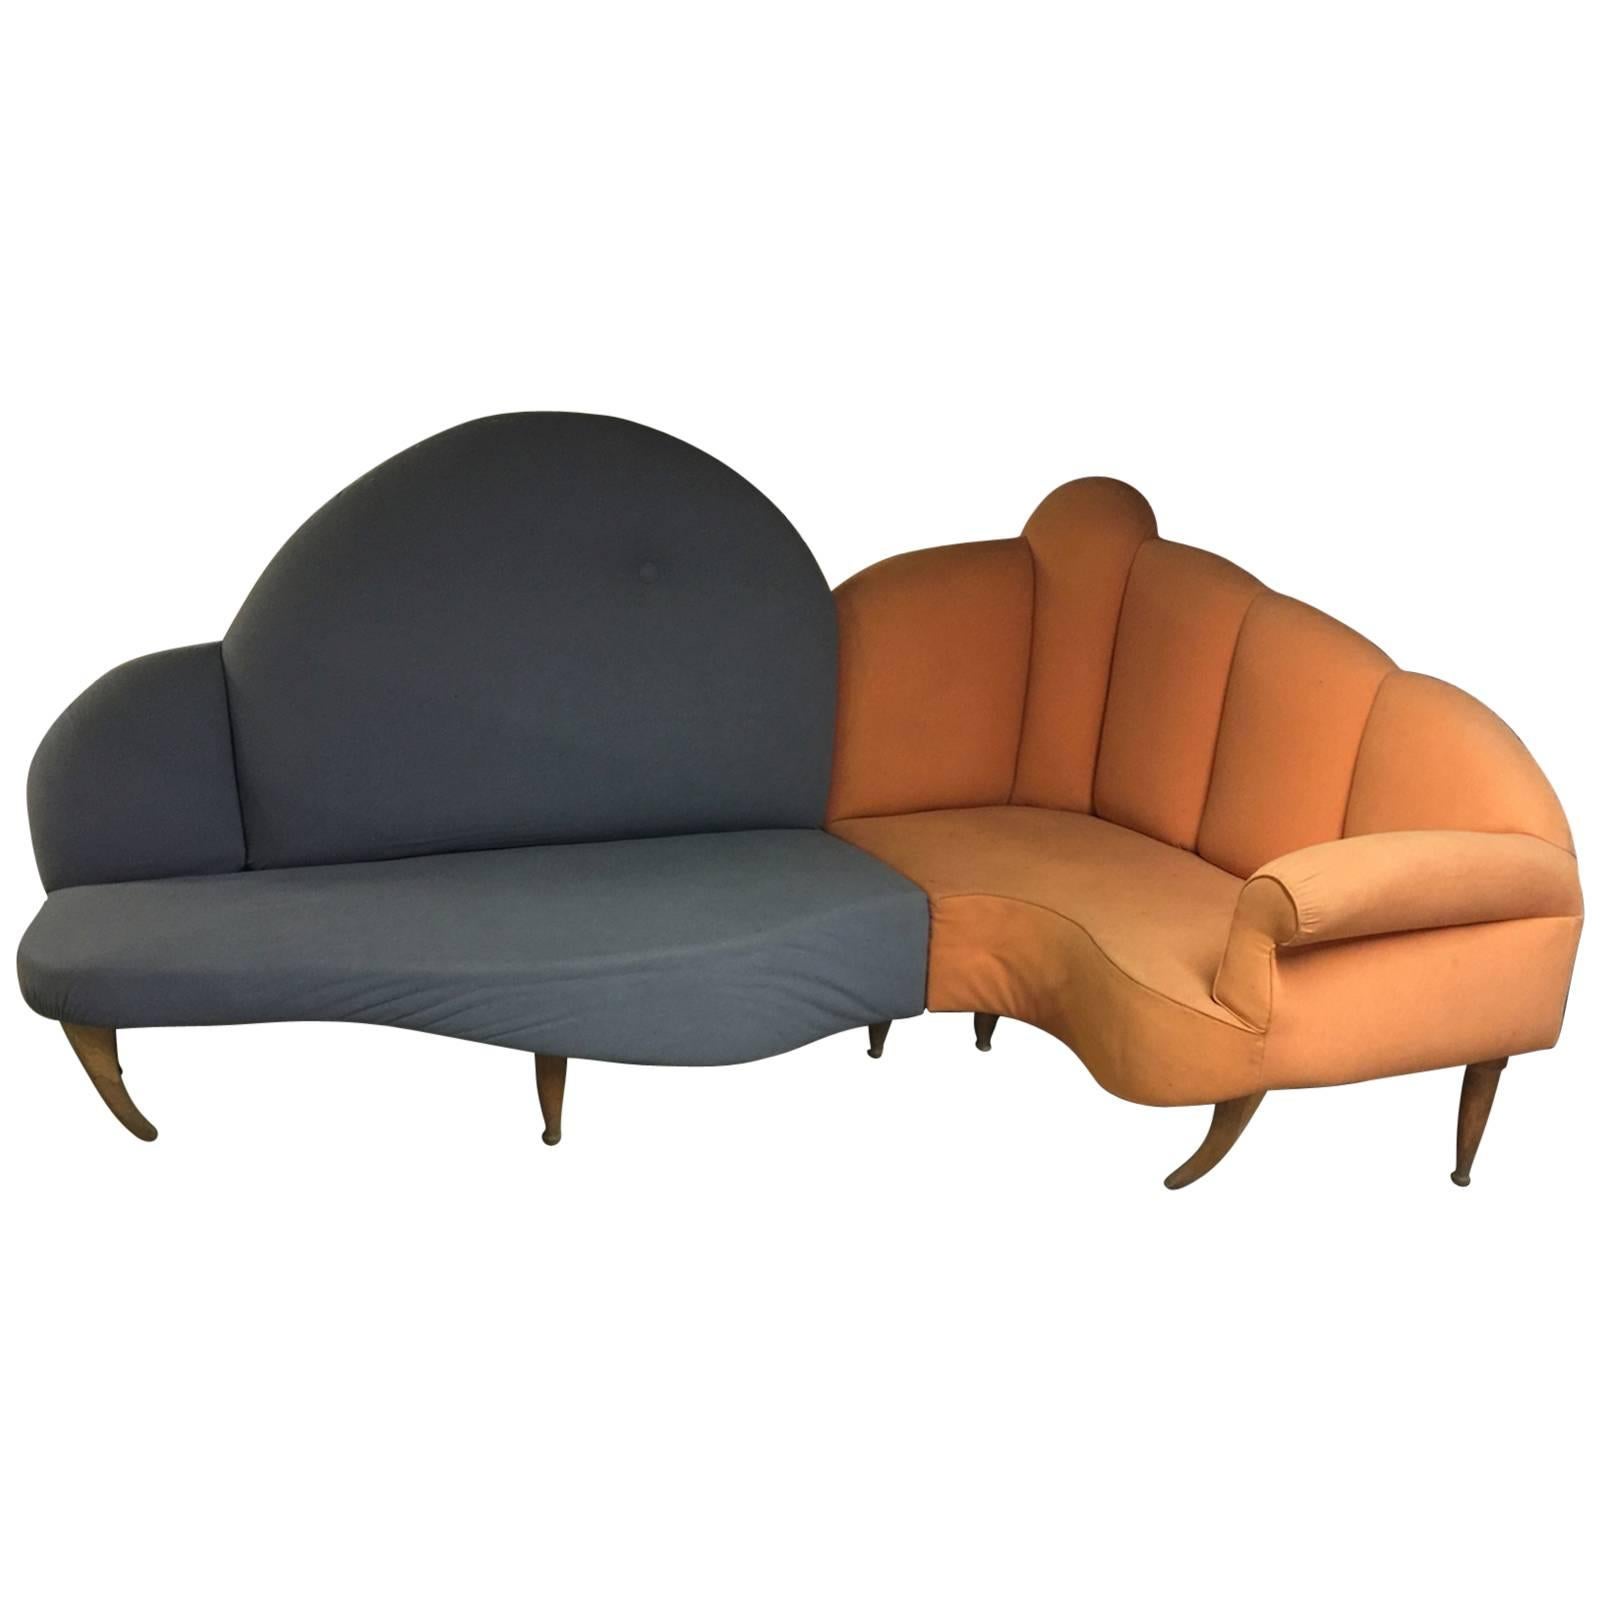 Unique Italien Sofa For Sale